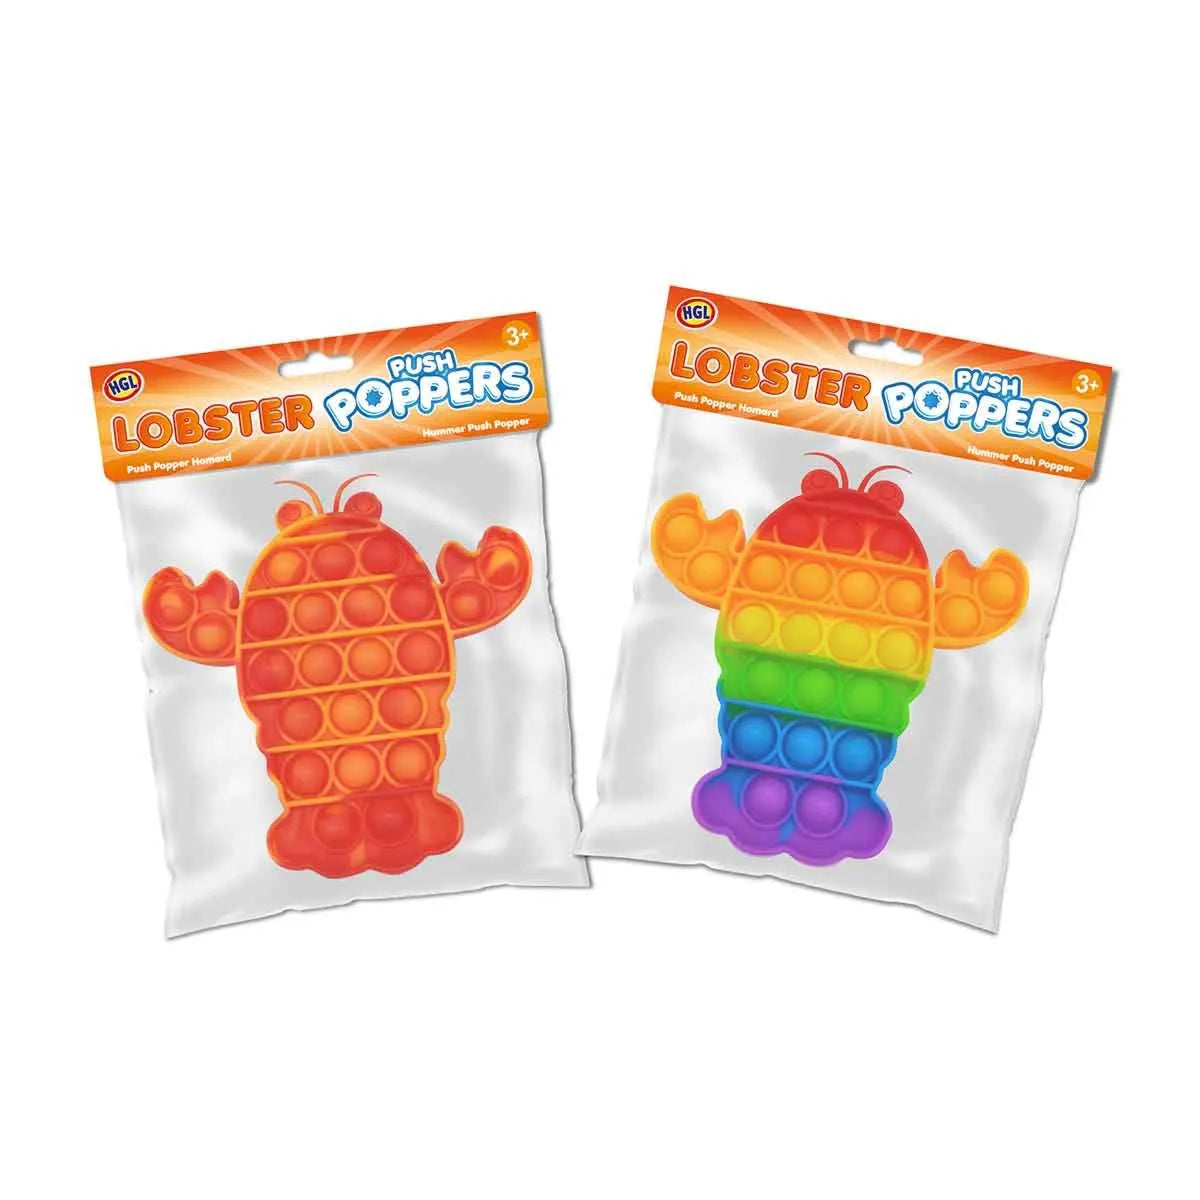 Push Popper Lobster assorted